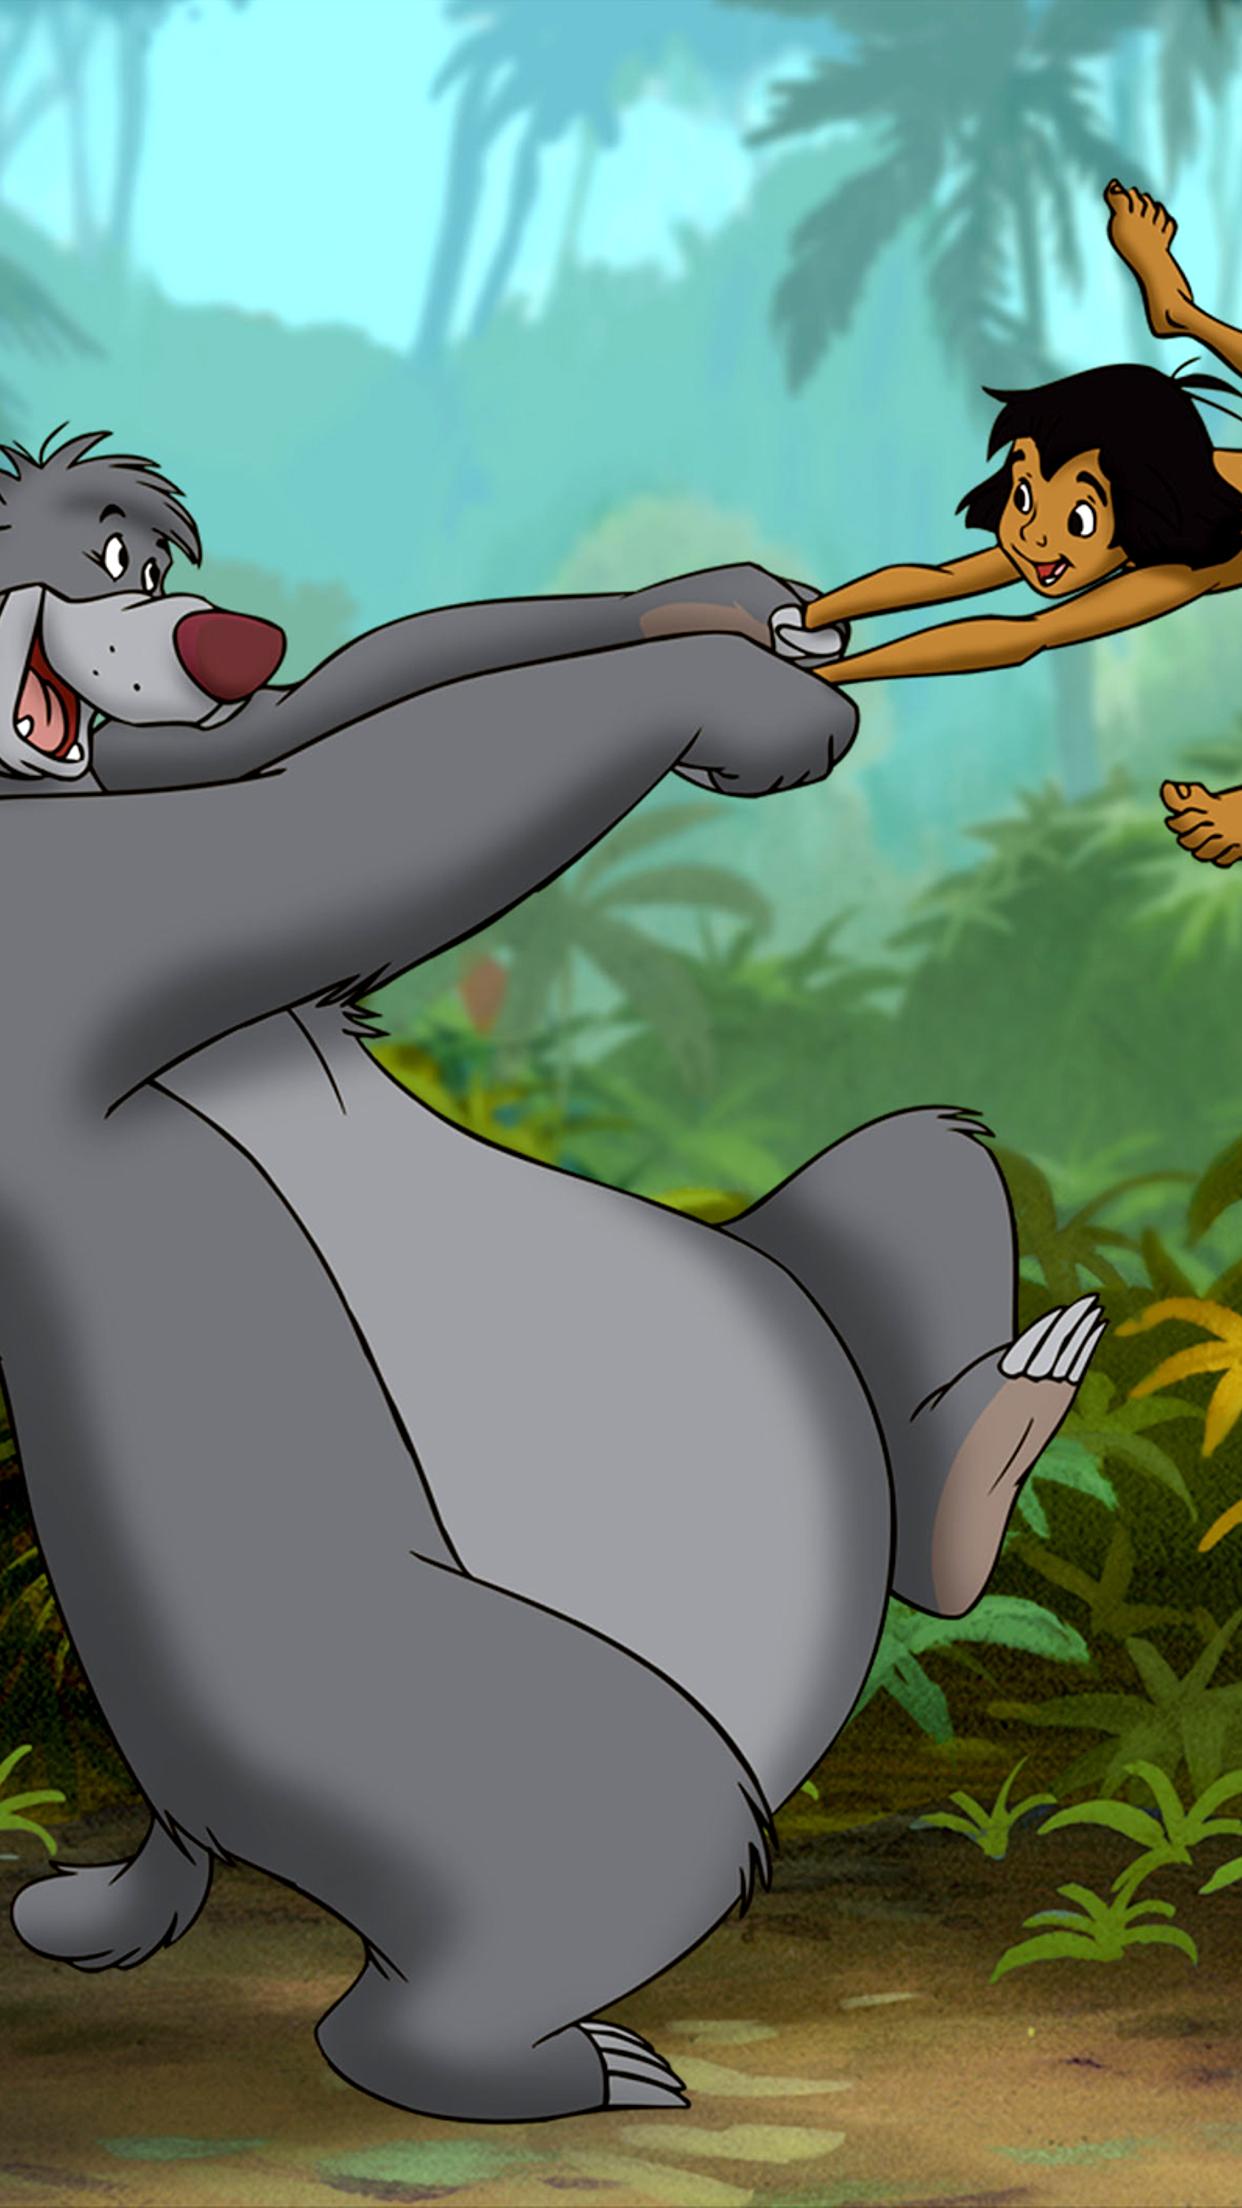 Jungle book and baloo characters